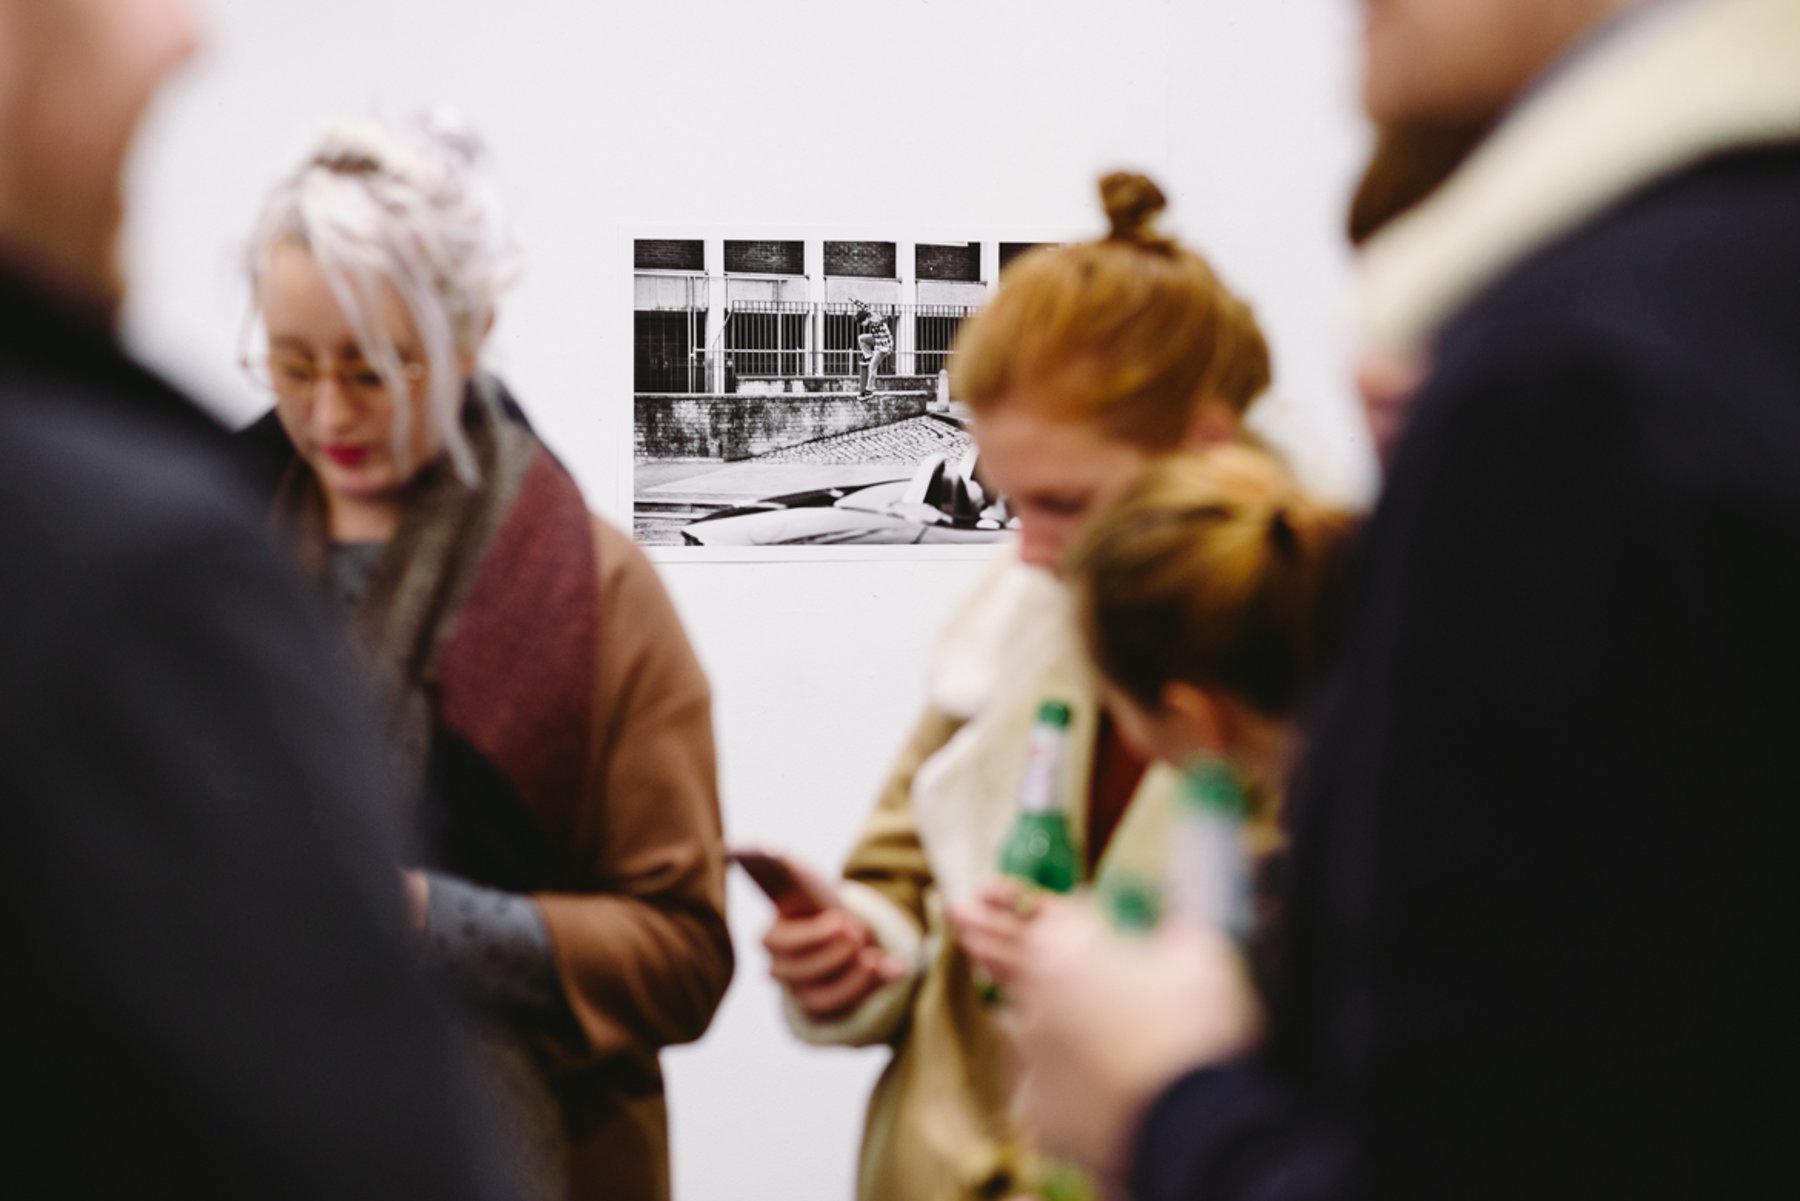 _IHC7830e-Grey-x-Converse-Henry-Kingsford-Lex-Kembery-Photo-Exhibition-Blend-Video-Premiere-Hoxton-Arches-London-October-2015-Photographer-Maksim-Kalanep